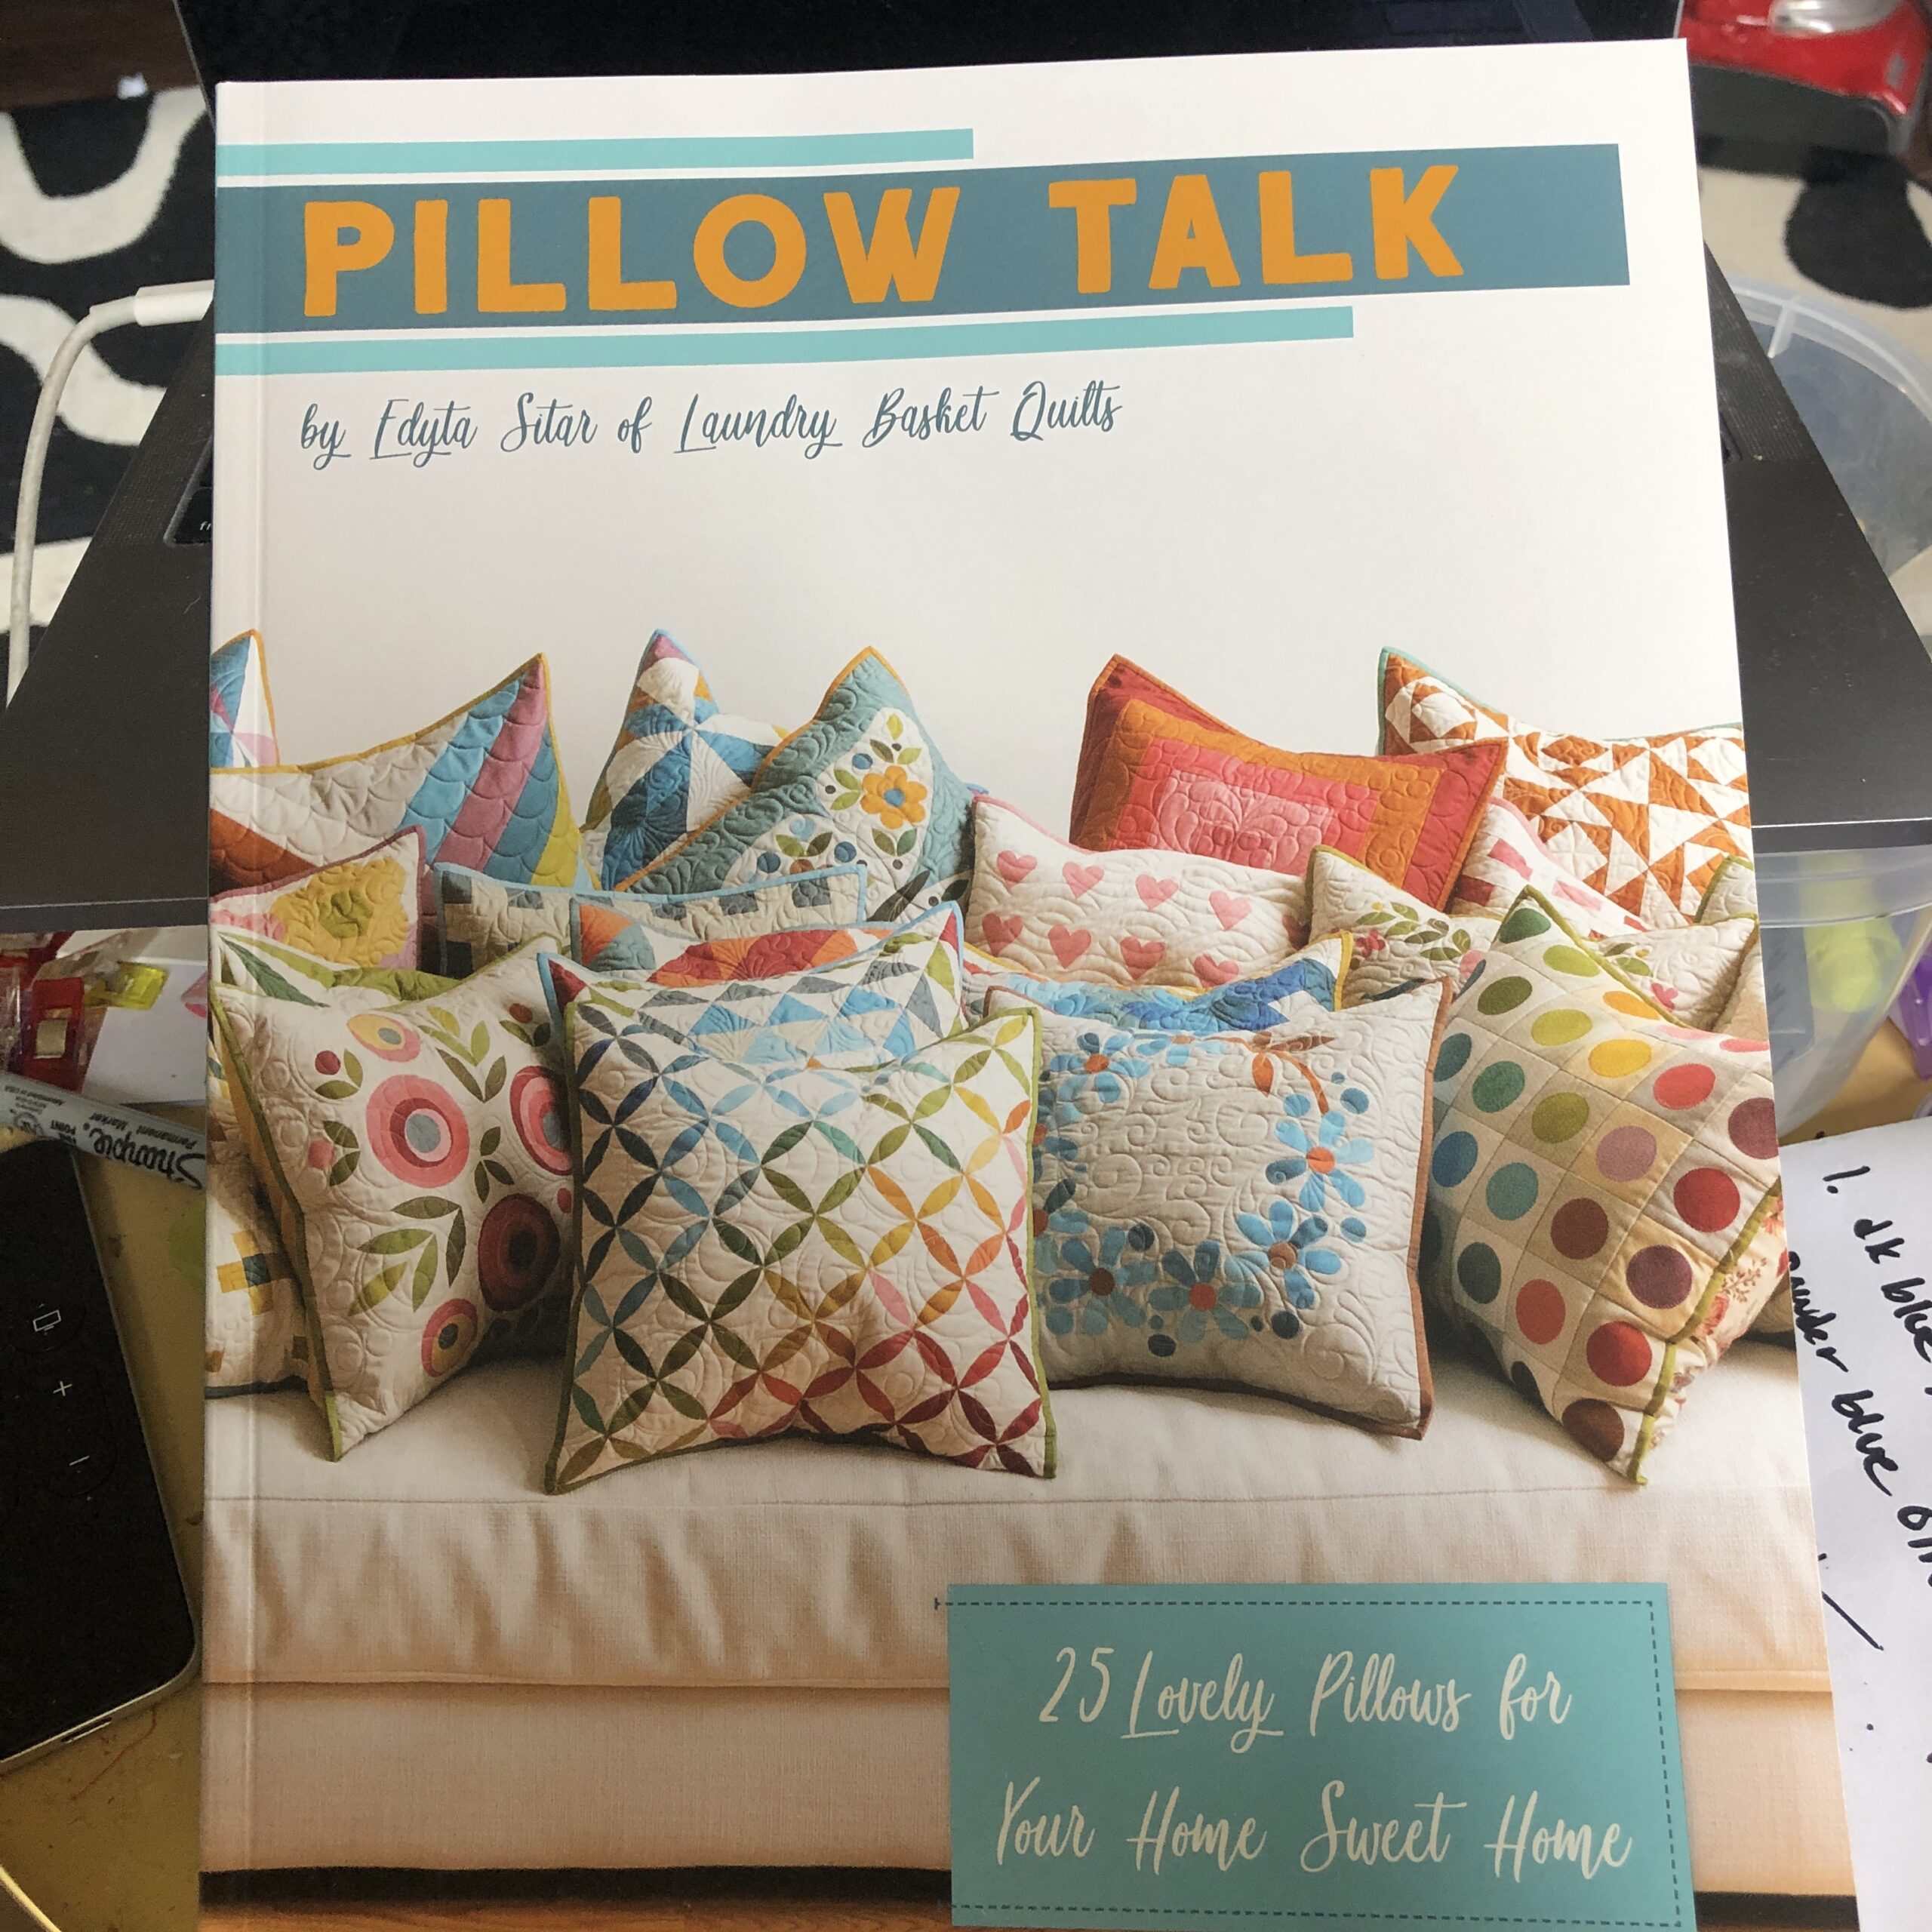 Just got my copy of Pillow Talk!